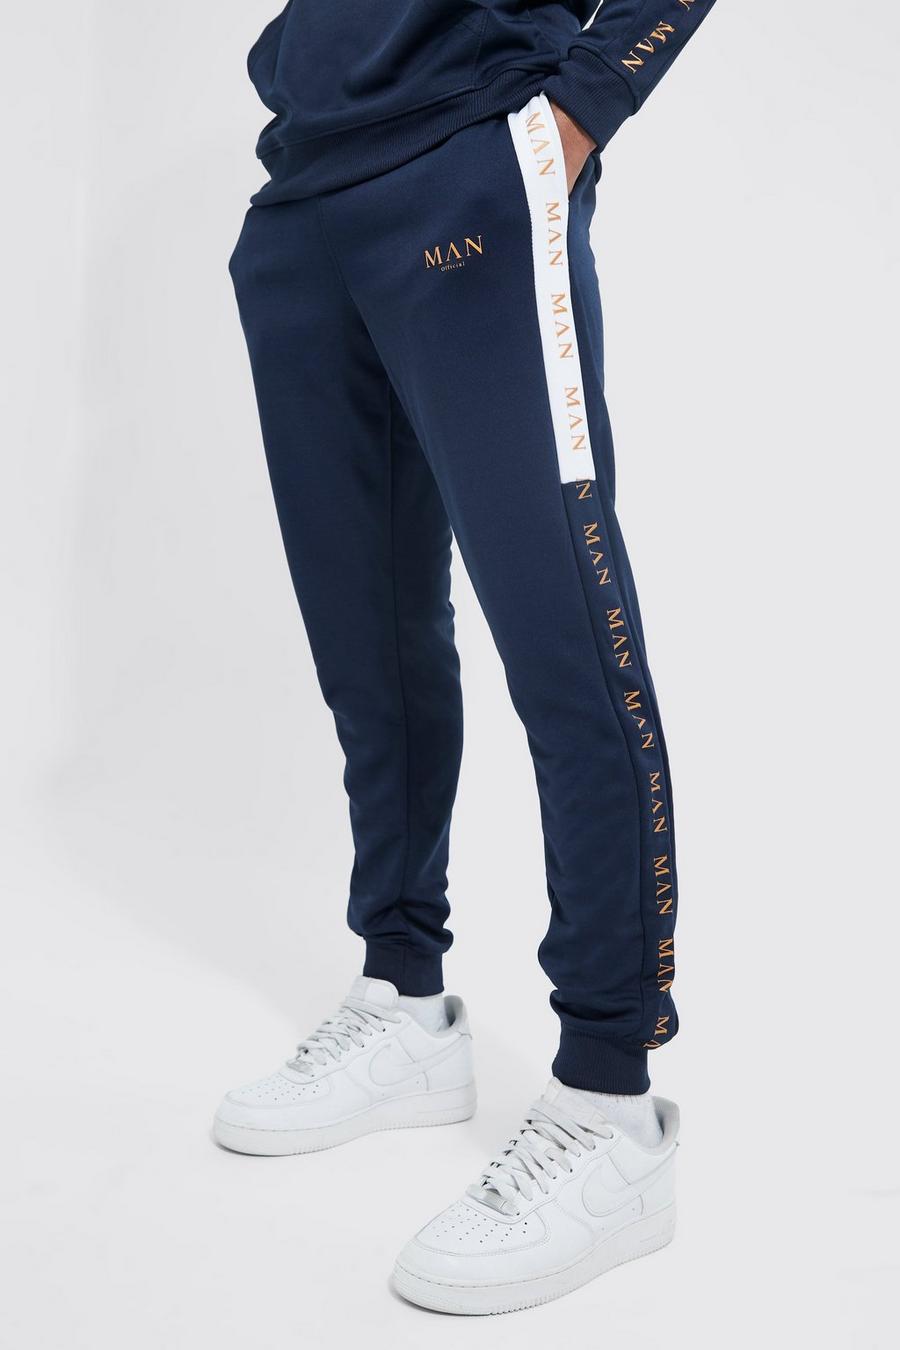 Pantaloni tuta Man Gold in tricot Skinny Fit con pannelli laterali, Navy blu oltremare